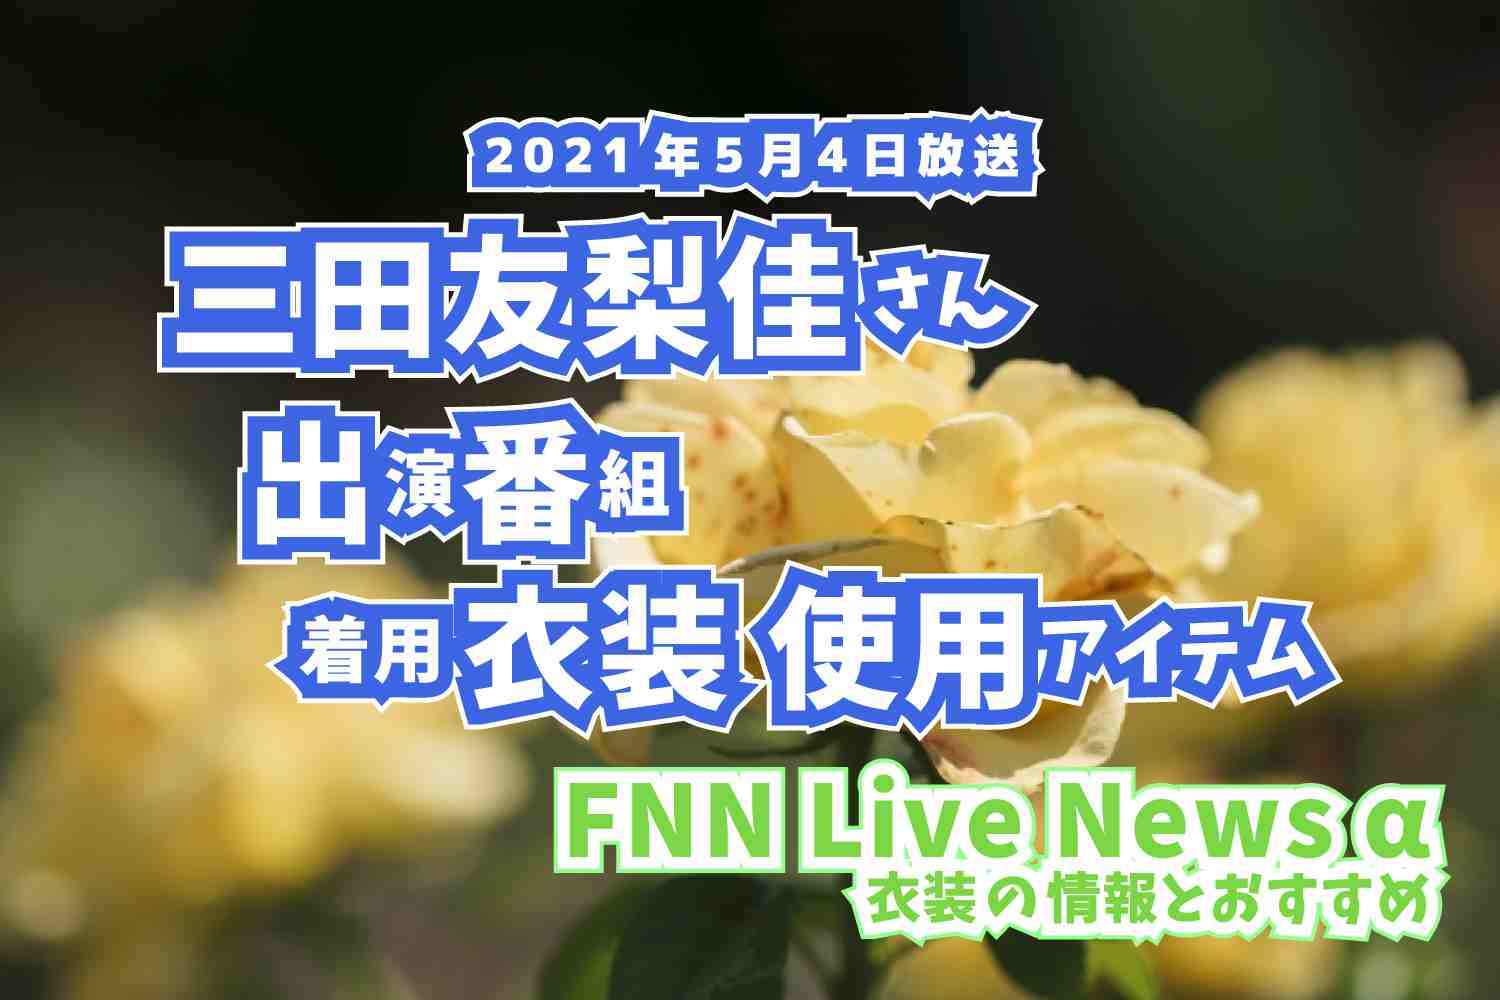 FNN Live News α　三田友梨佳さん　衣装　2021年5月4日放送